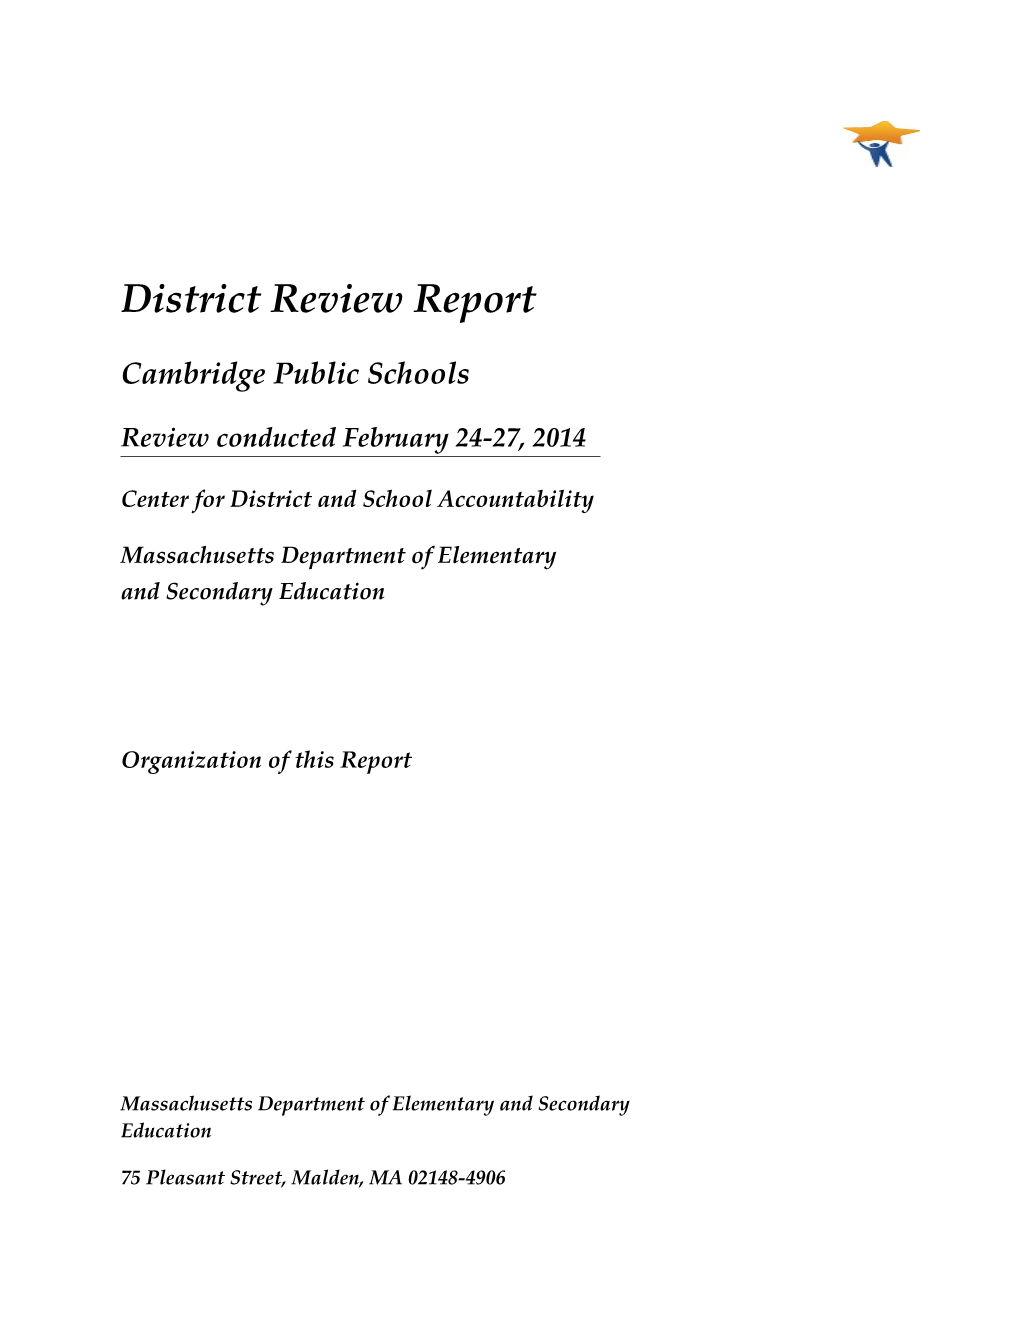 Cambridge District Review Report, 2014